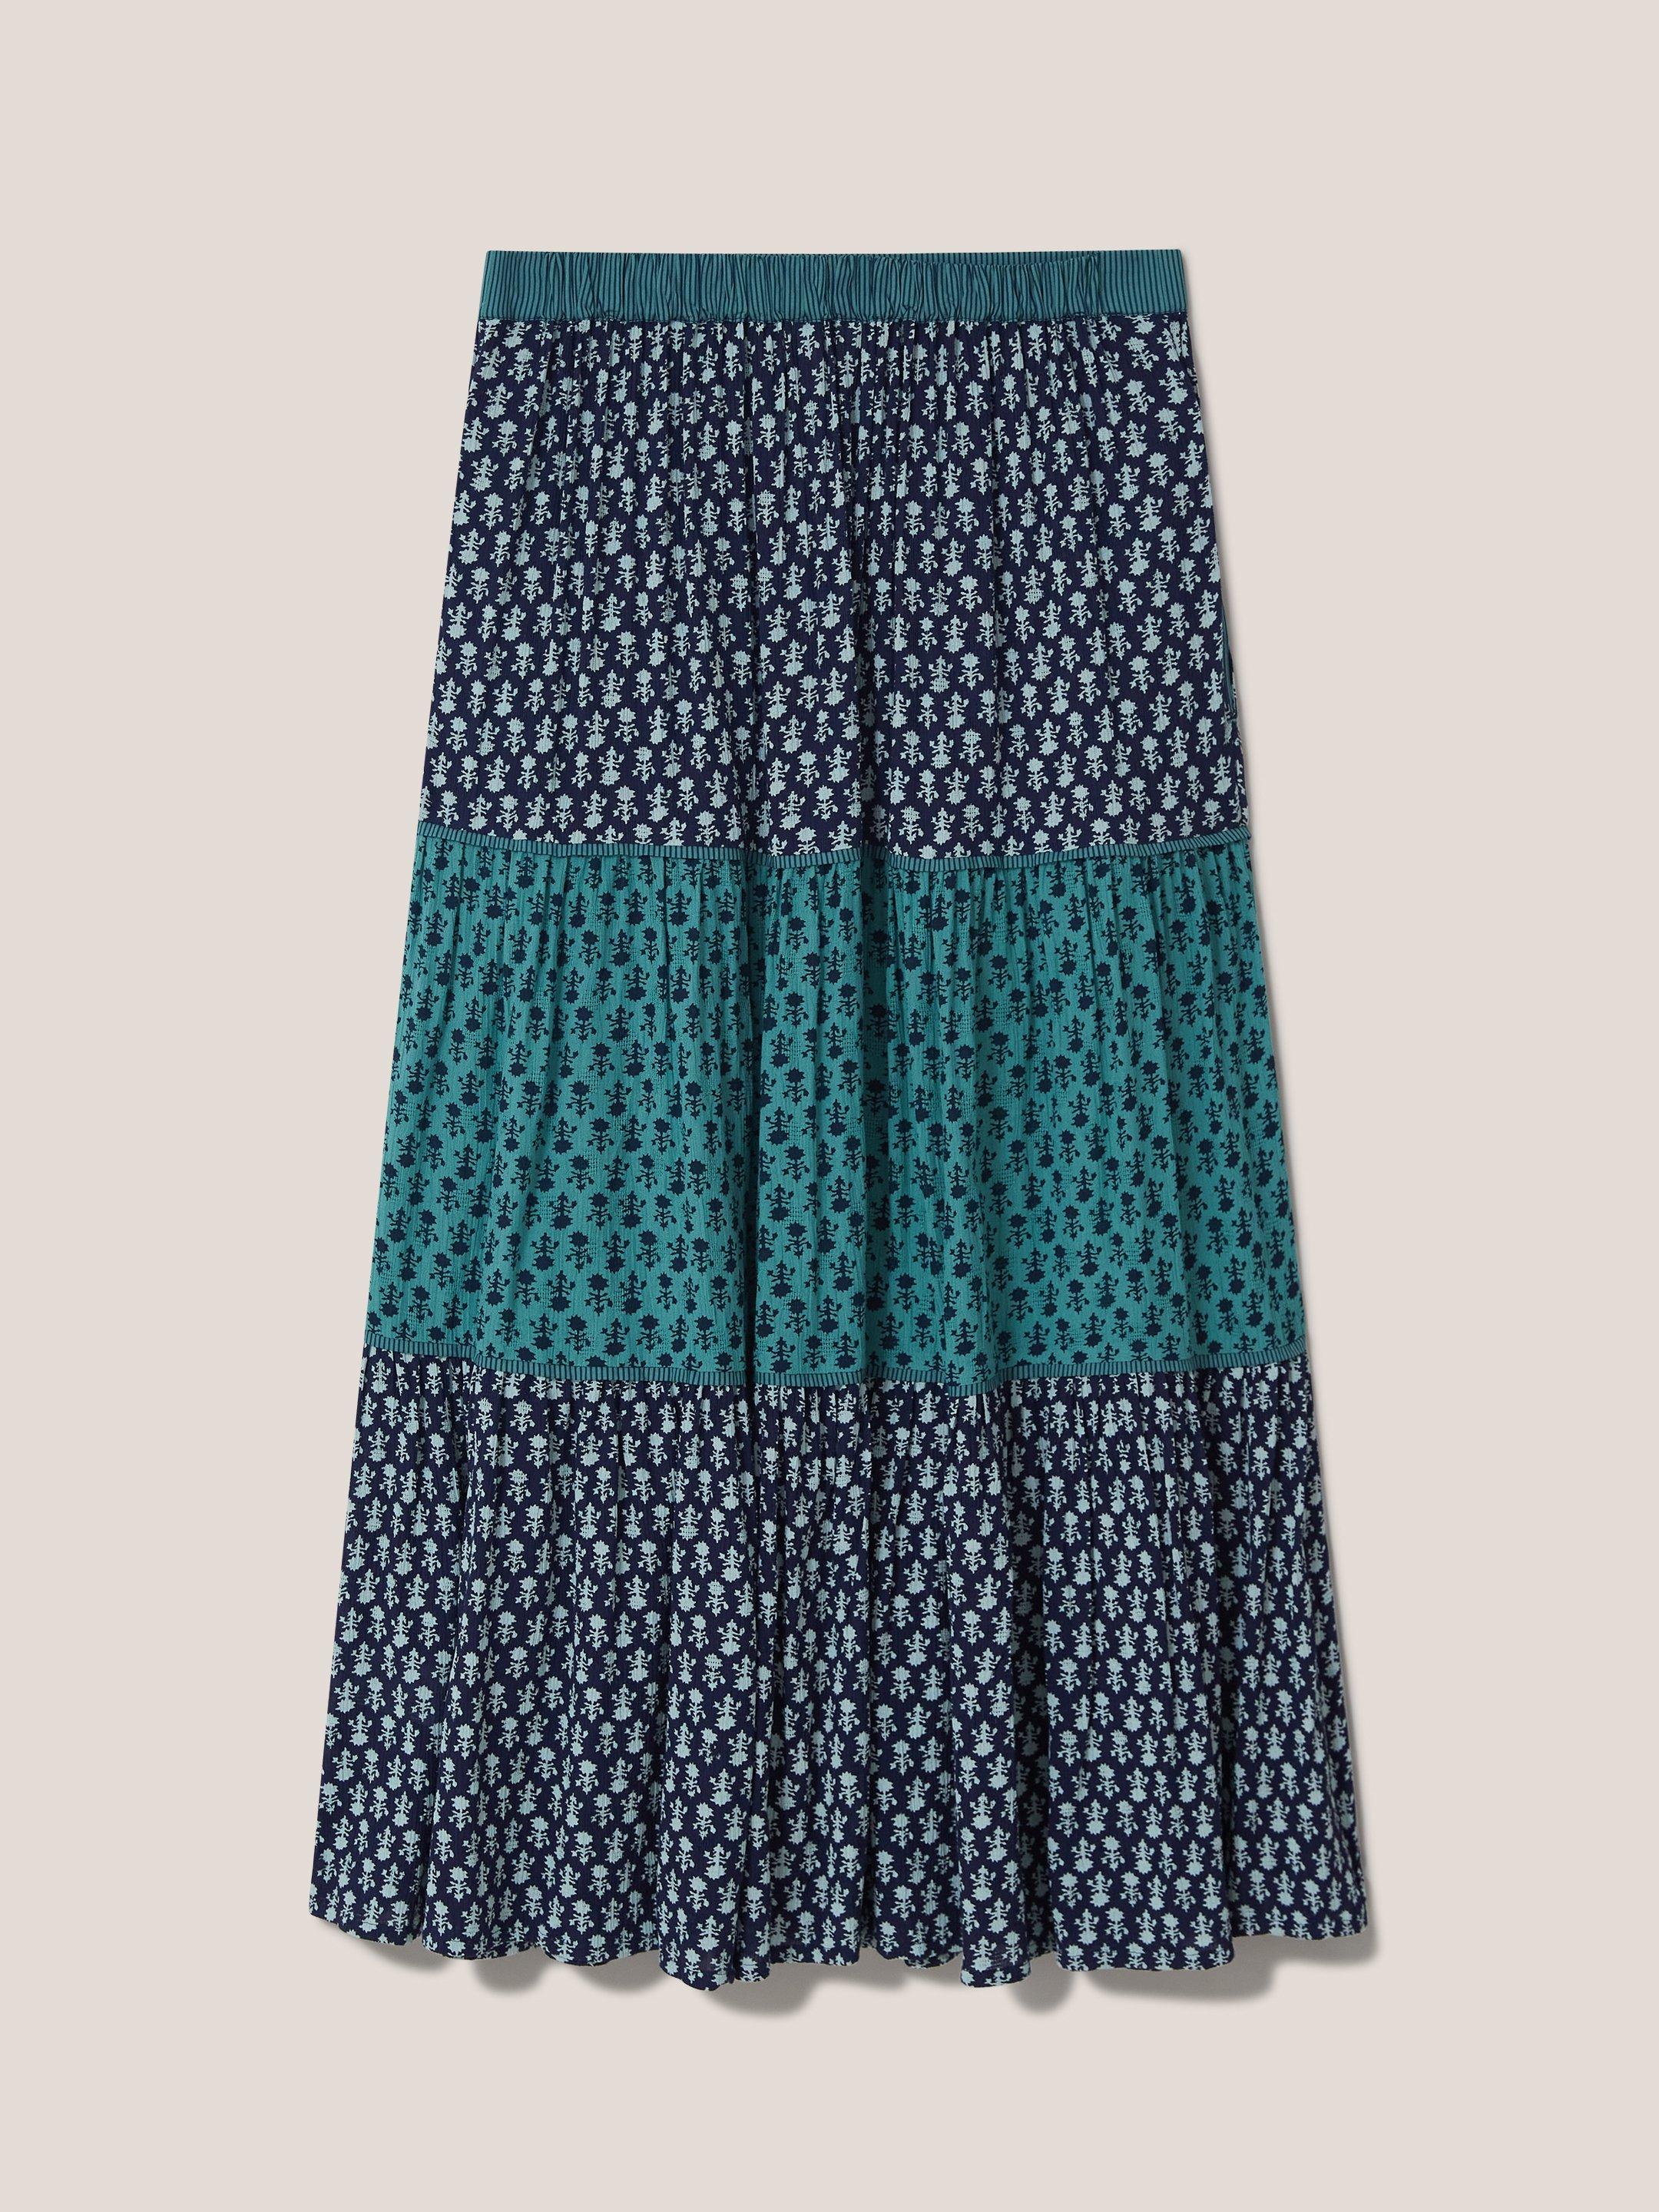 Mabel Mixed Print Midi Skirt in NAVY MULTI - FLAT BACK